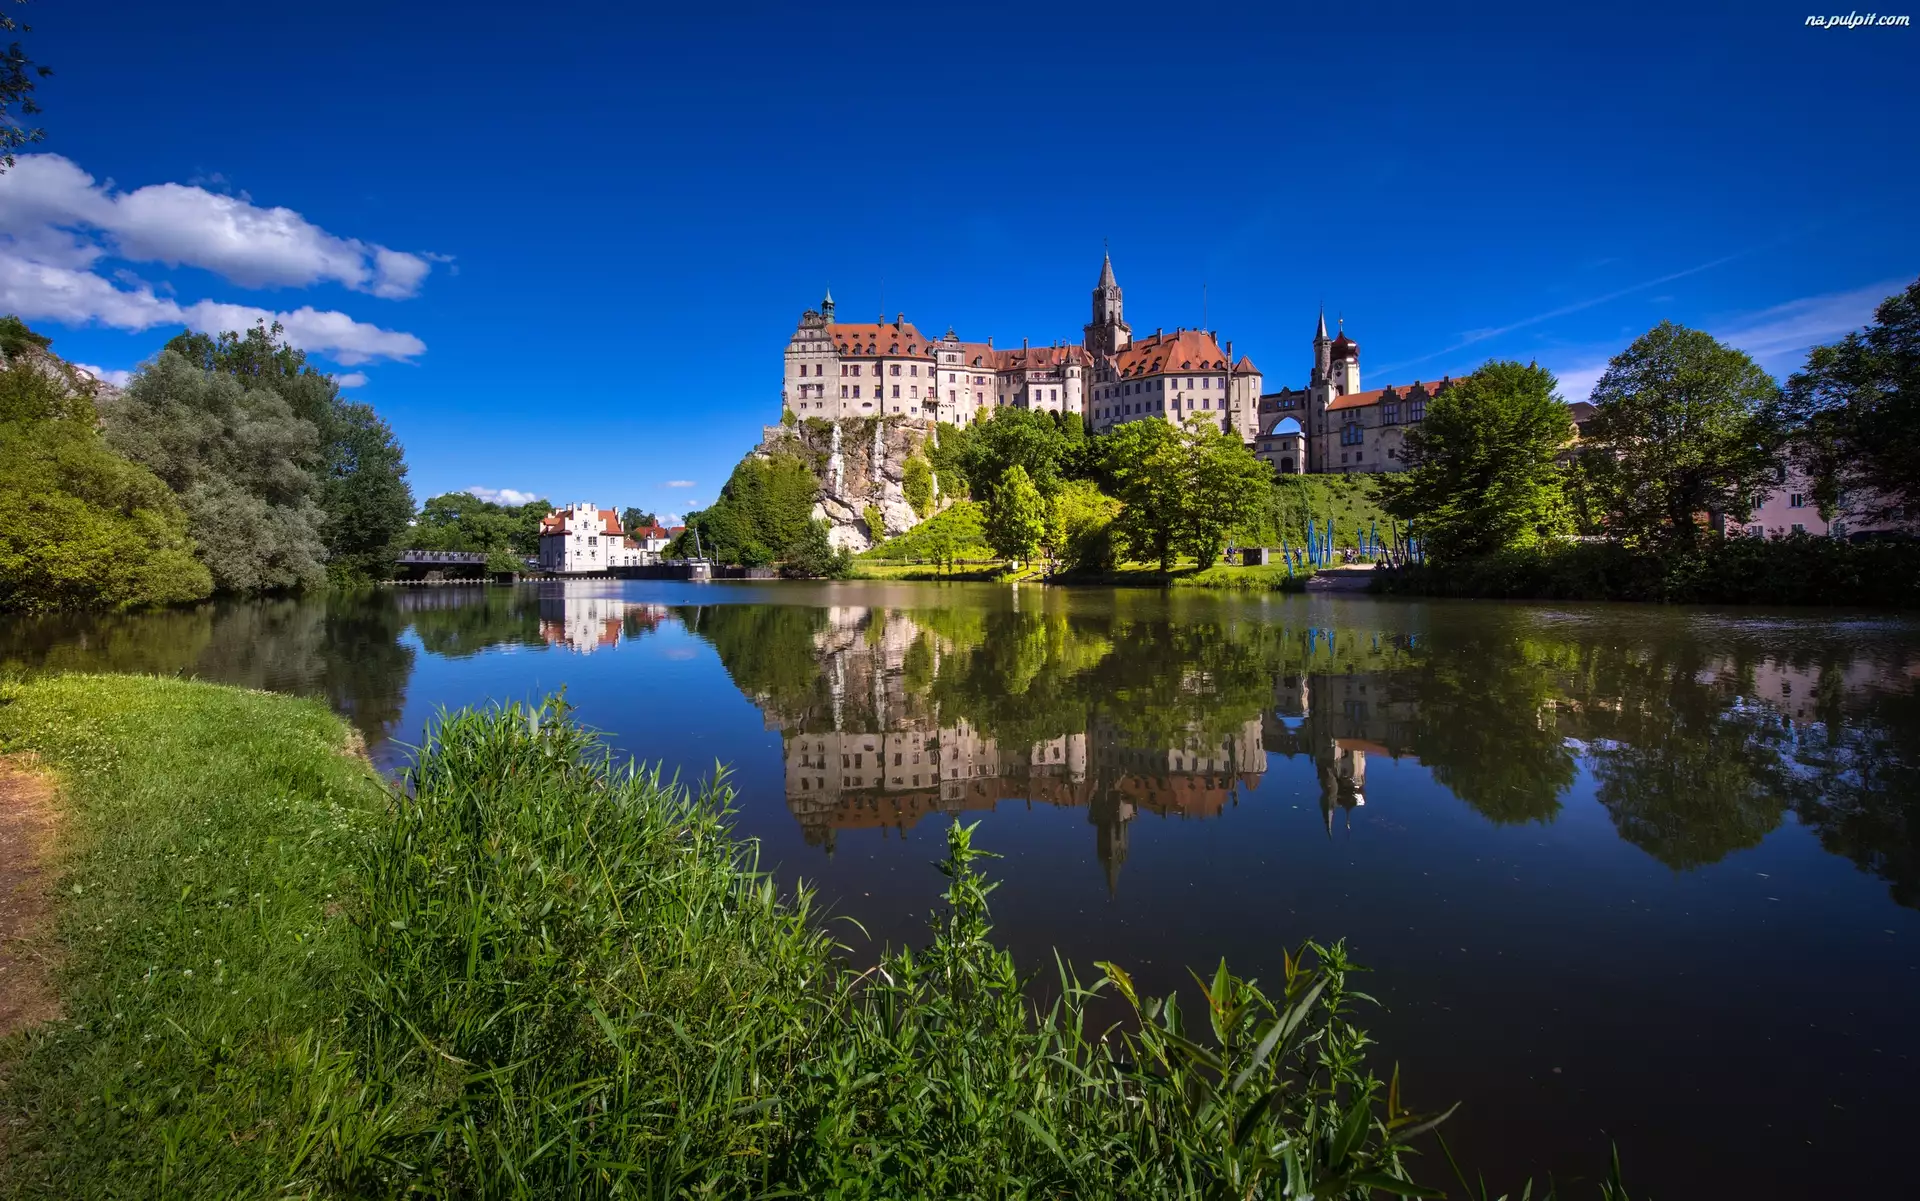 Rzeka Dunaj, Niemcy, Zamek Sigmaringen